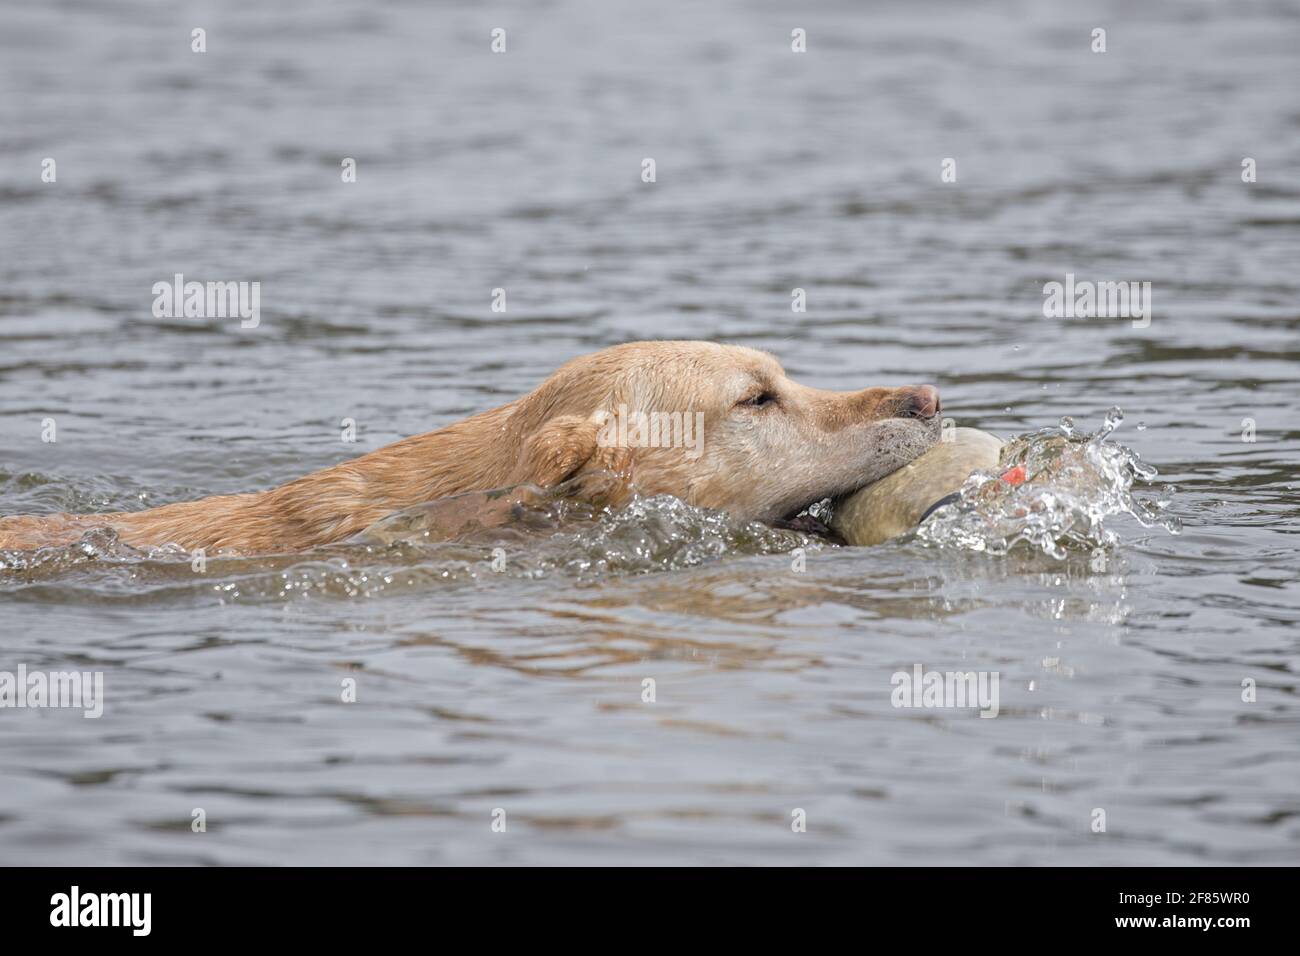 A golden retriever swims with a duck decoy in Hauser, Idaho. Stock Photo